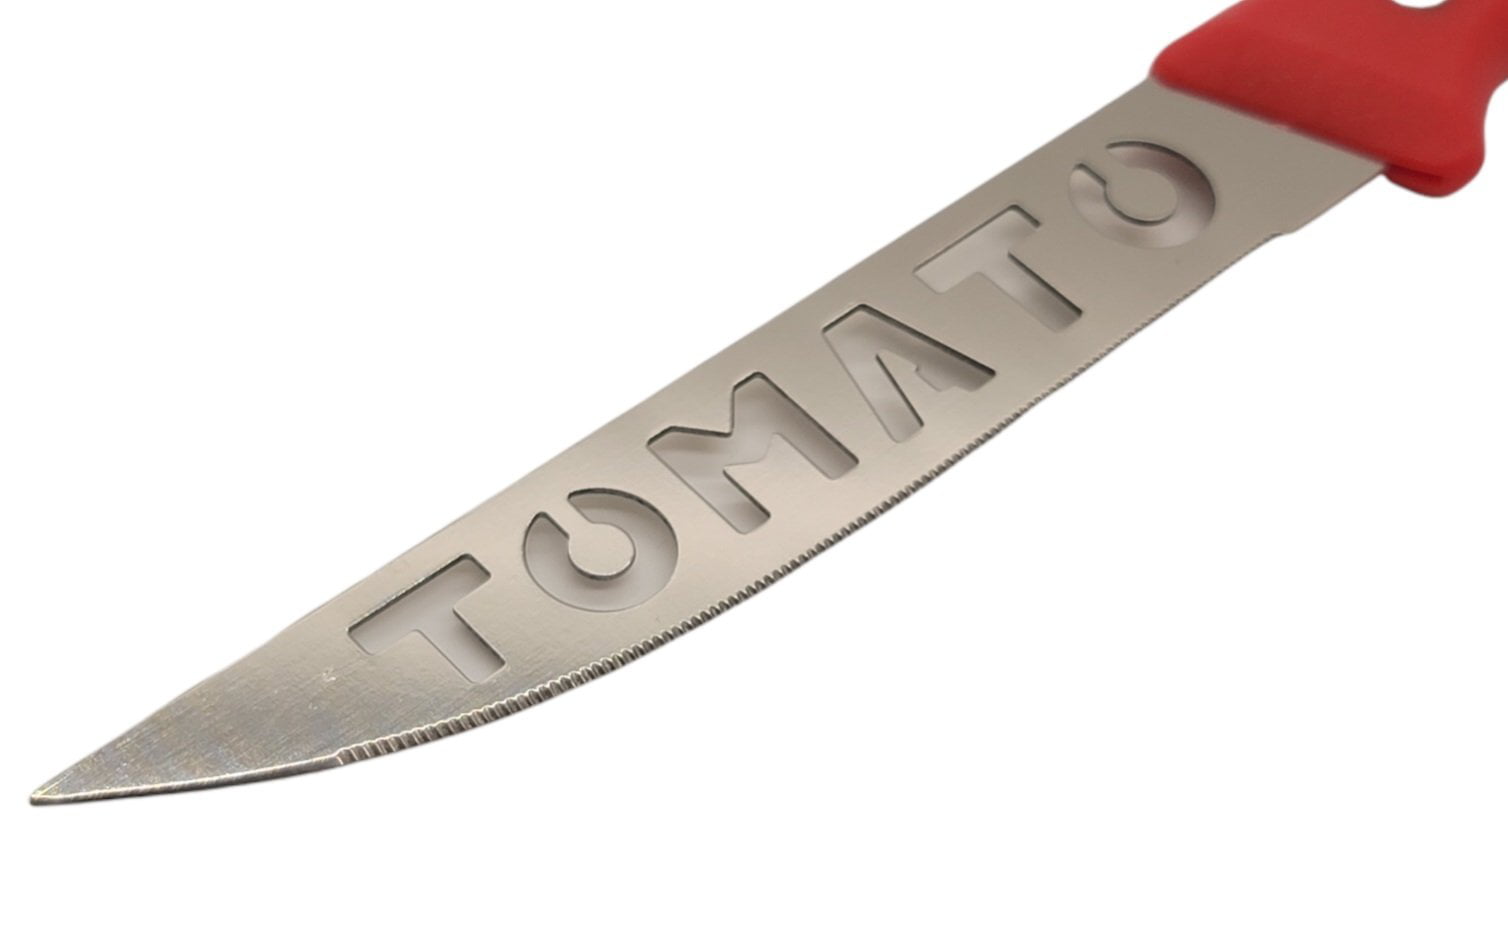 Hygiplas Serrated Tomato Knife Green 100mm - CF898 - Buy Online at Nisbets